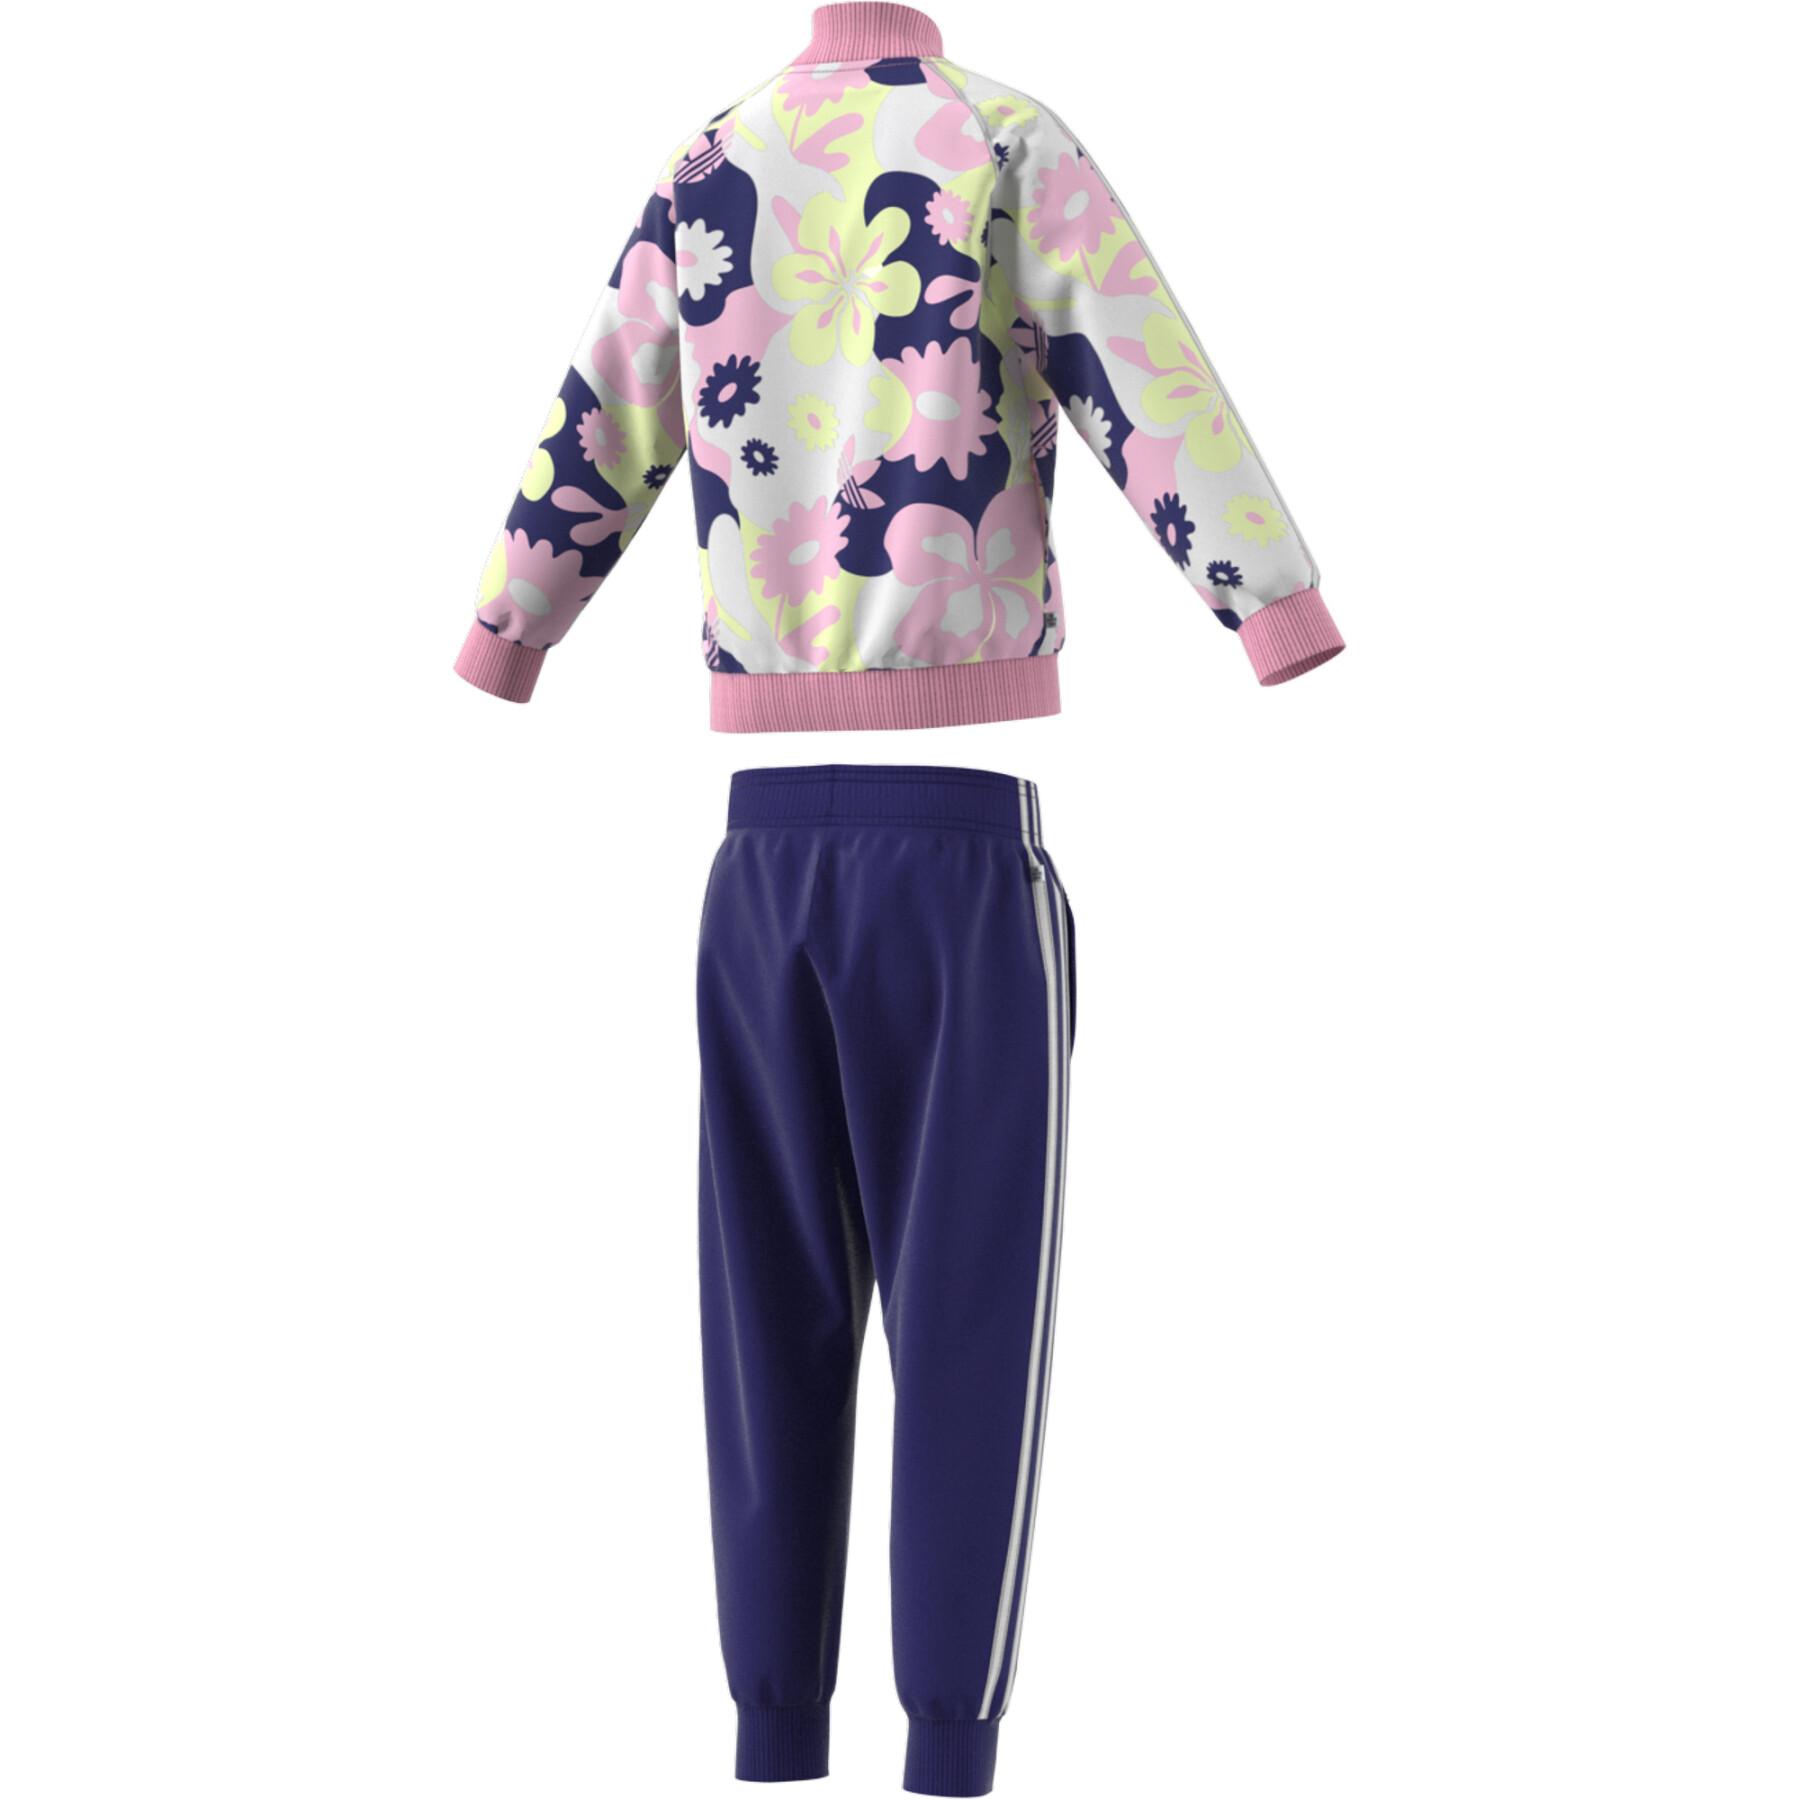 Girl's outfit adidas Originals Flower Print